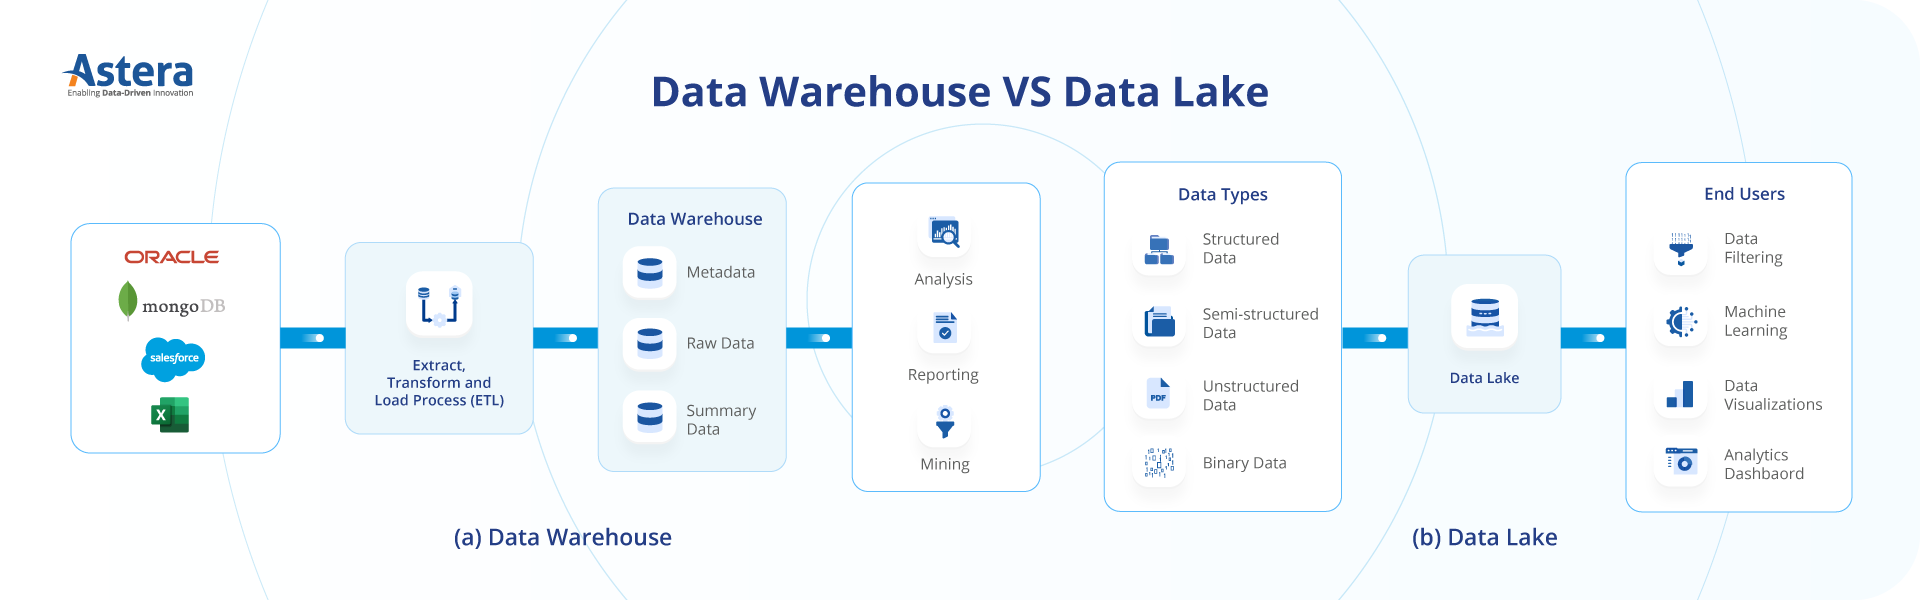 Data warehouse vs Data lake